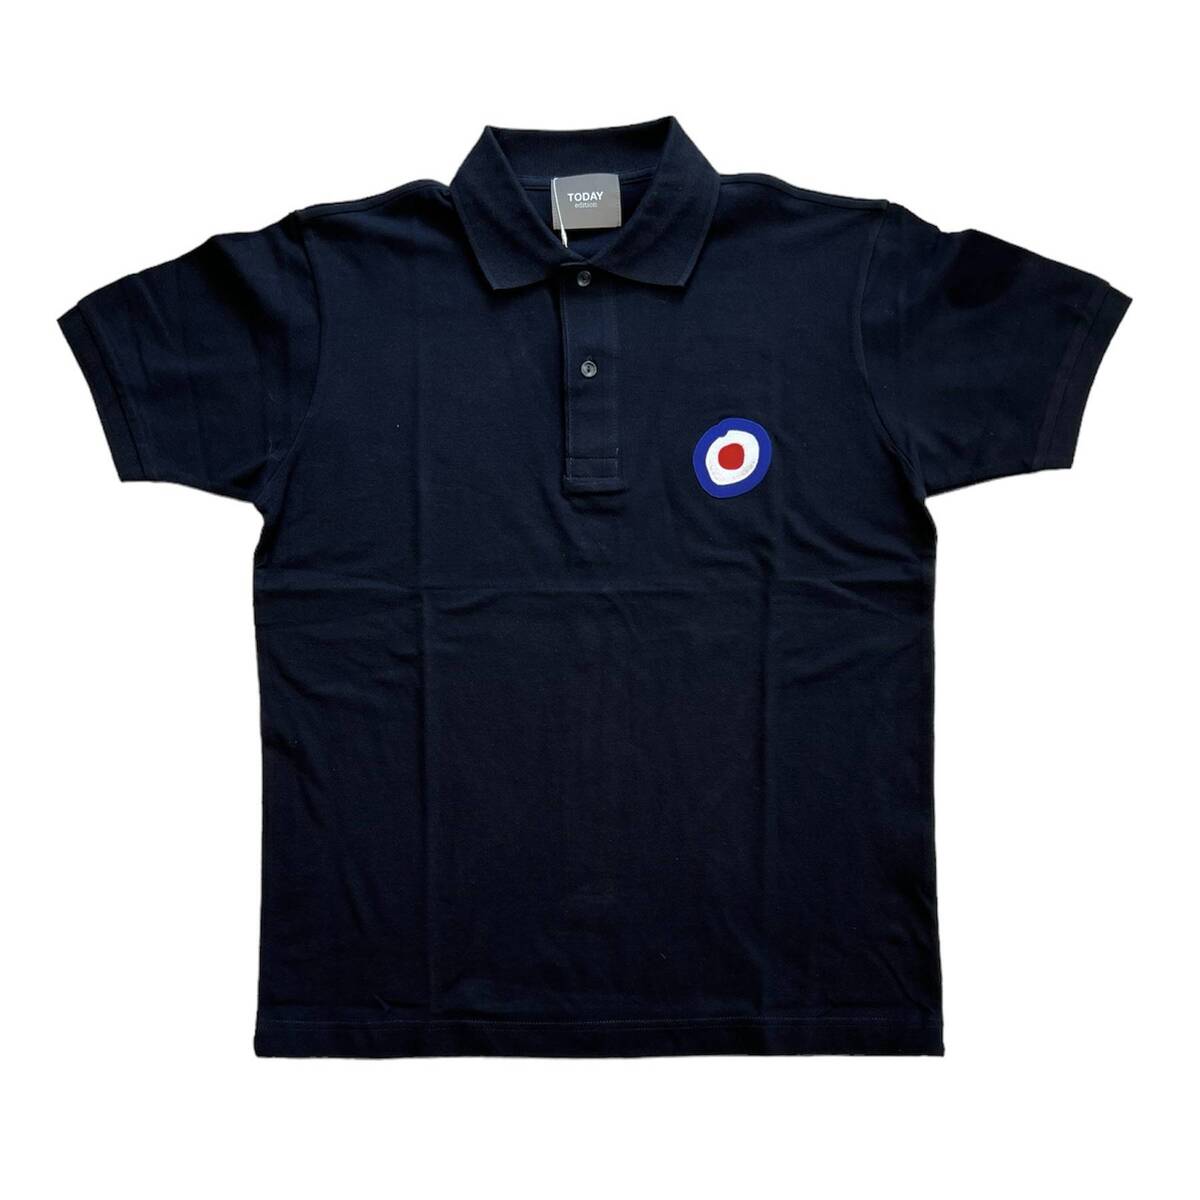 TODAY edition target mark polo shirt 1